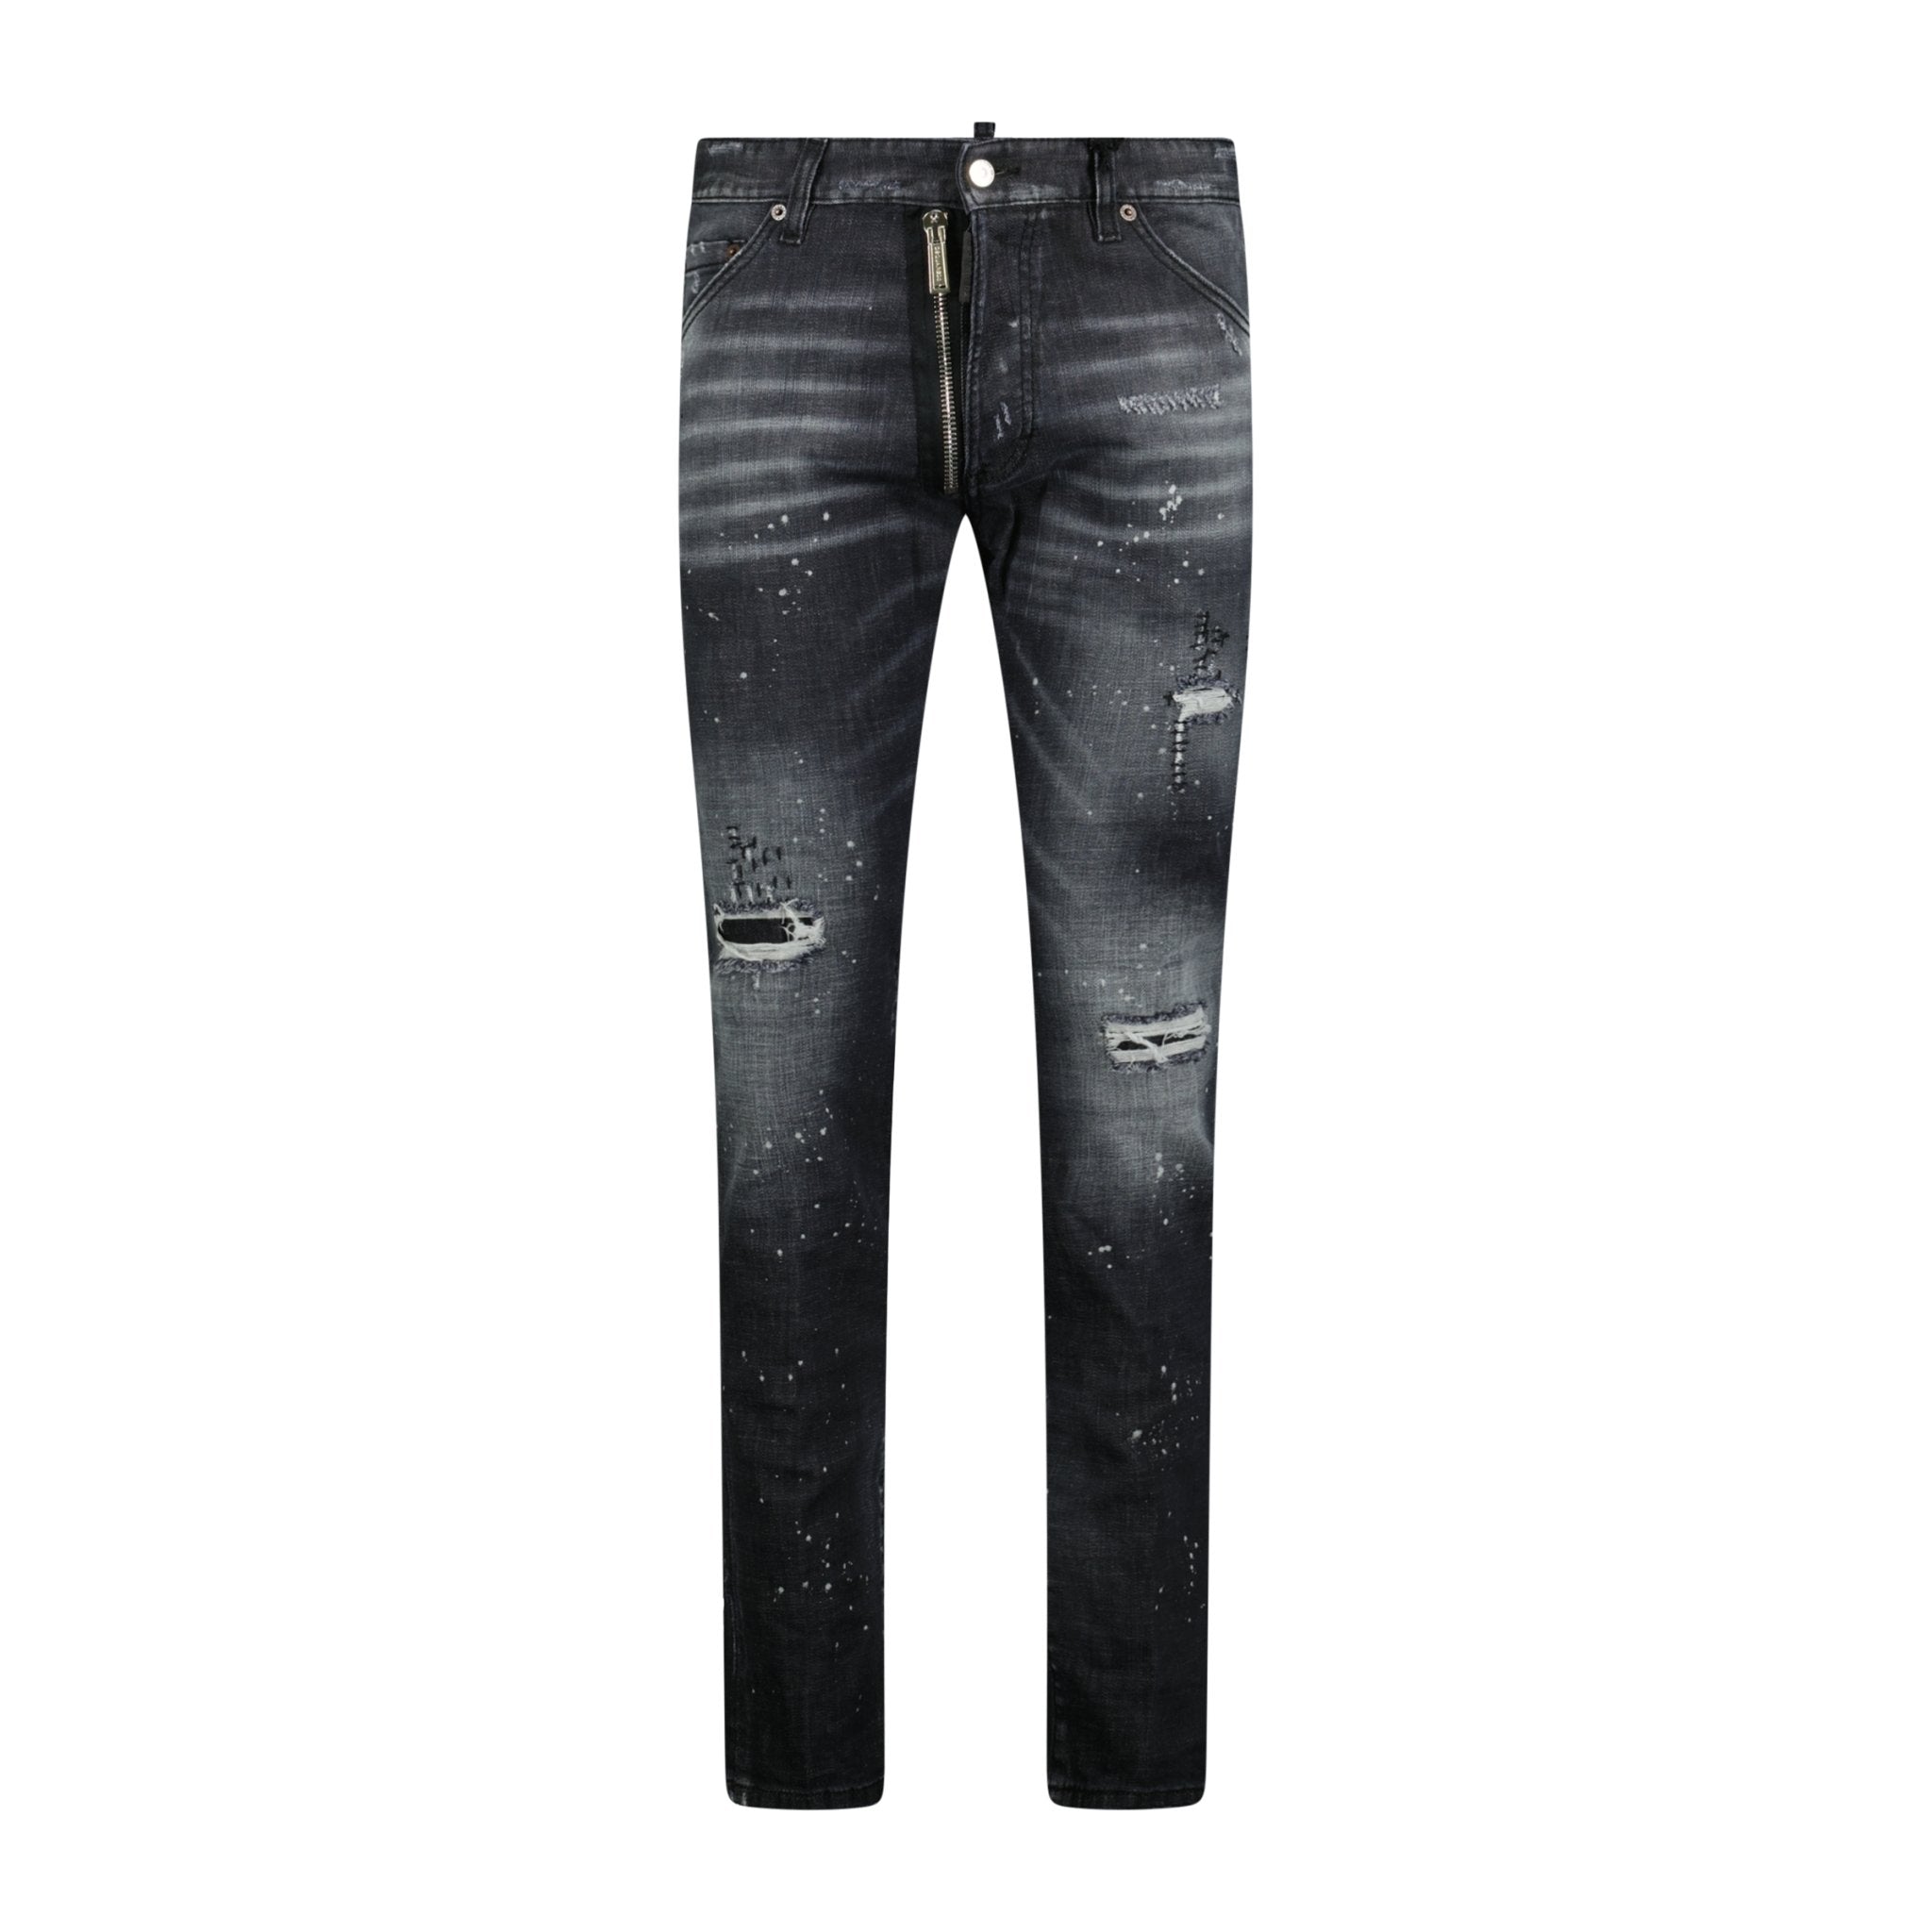 DSquared2 'Cool Guy' Slim Fit Jeans Black